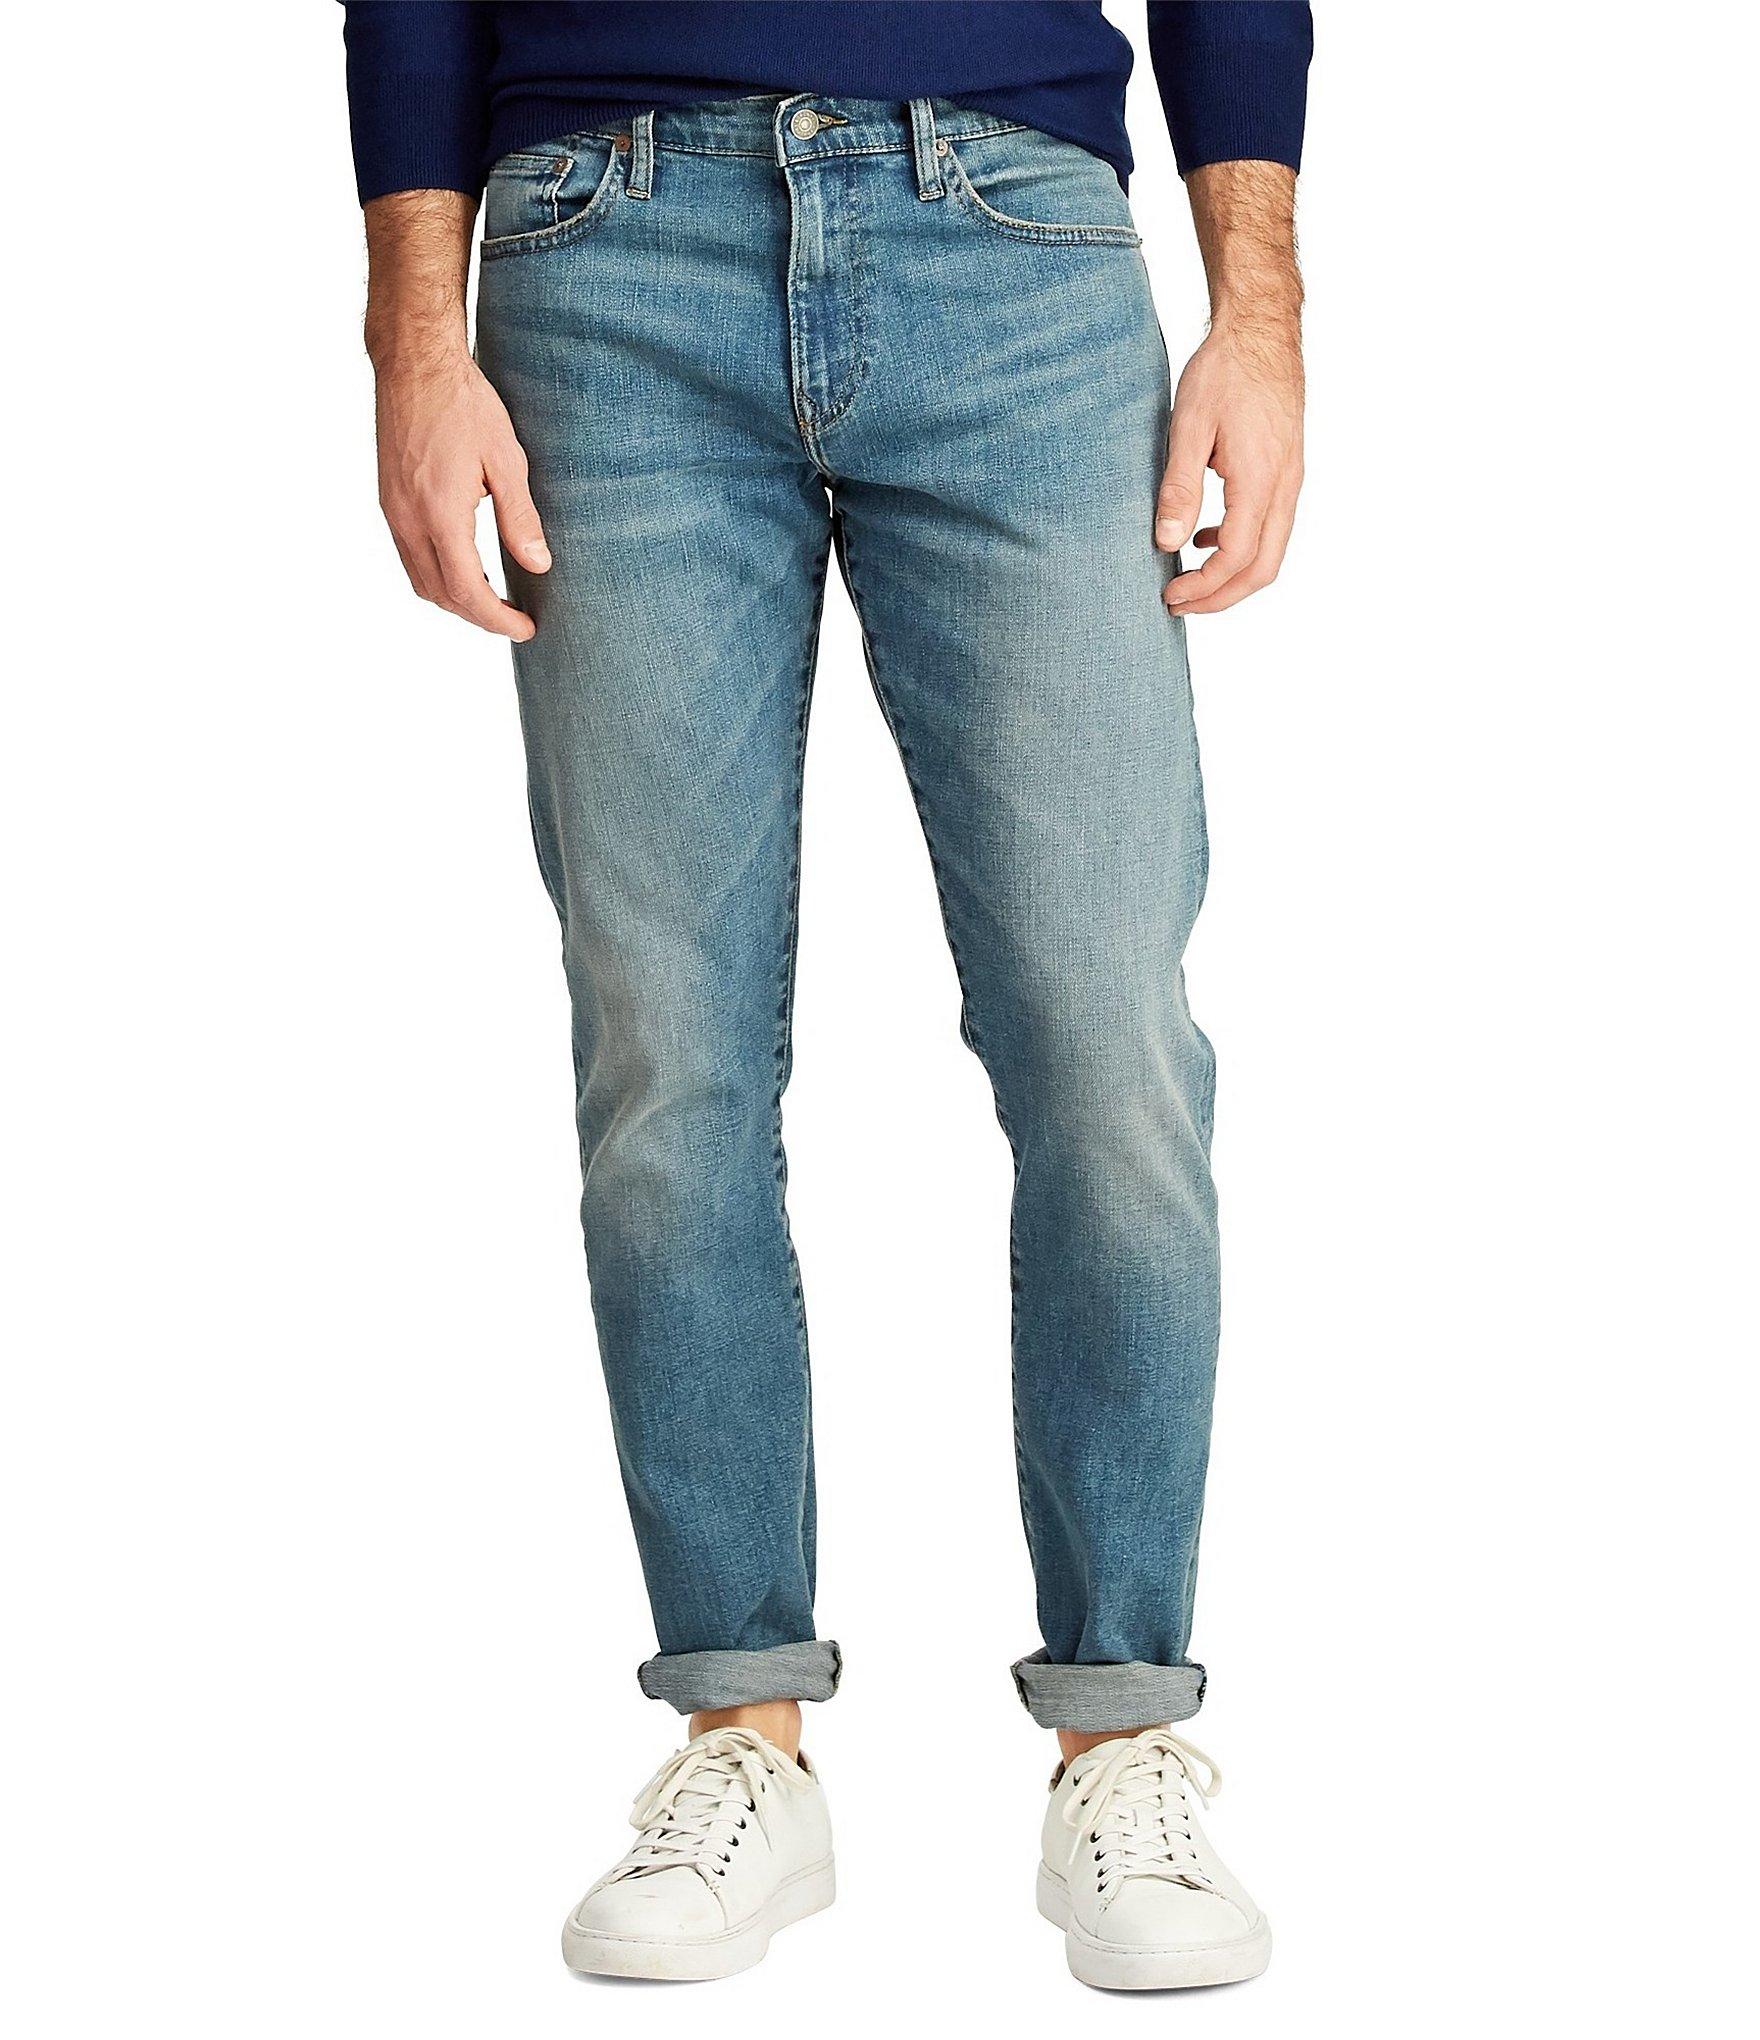 Polo Ralph Lauren Sullivan Slim-fit Stretch Jeans in Blue for Men - Lyst